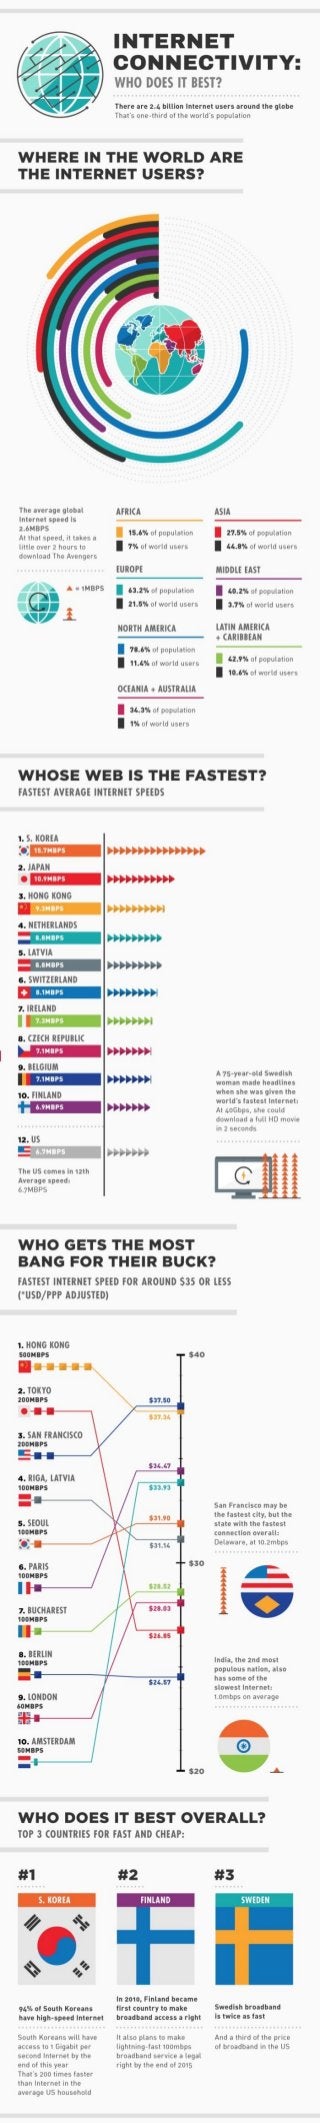 Global Internet Usage Statistics 2013